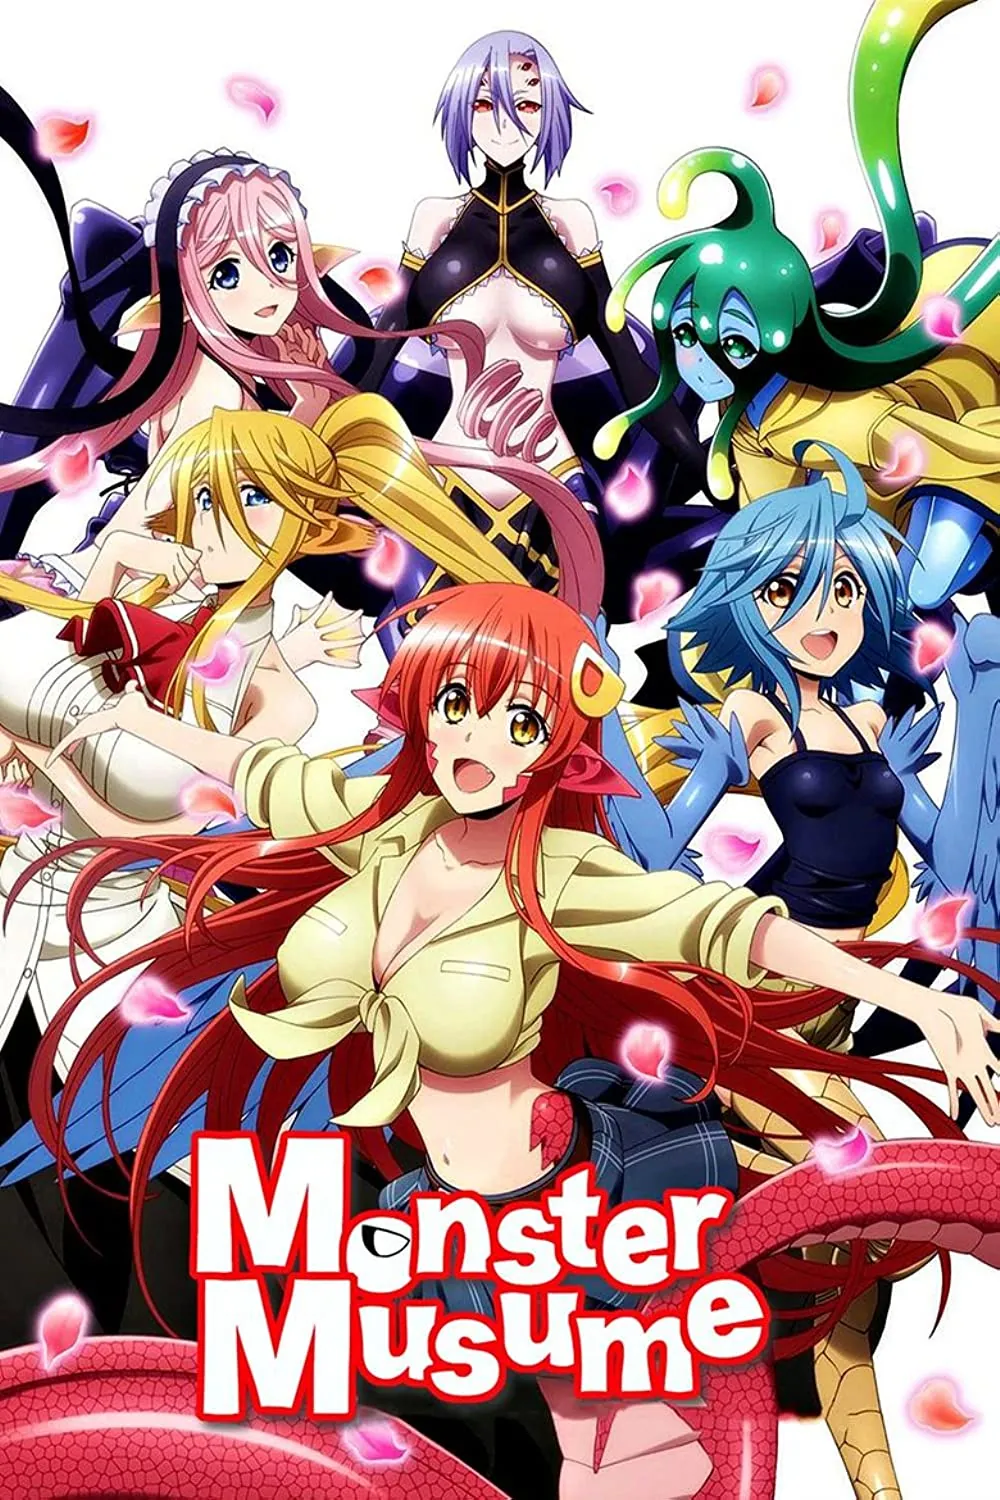 Monster Musume 